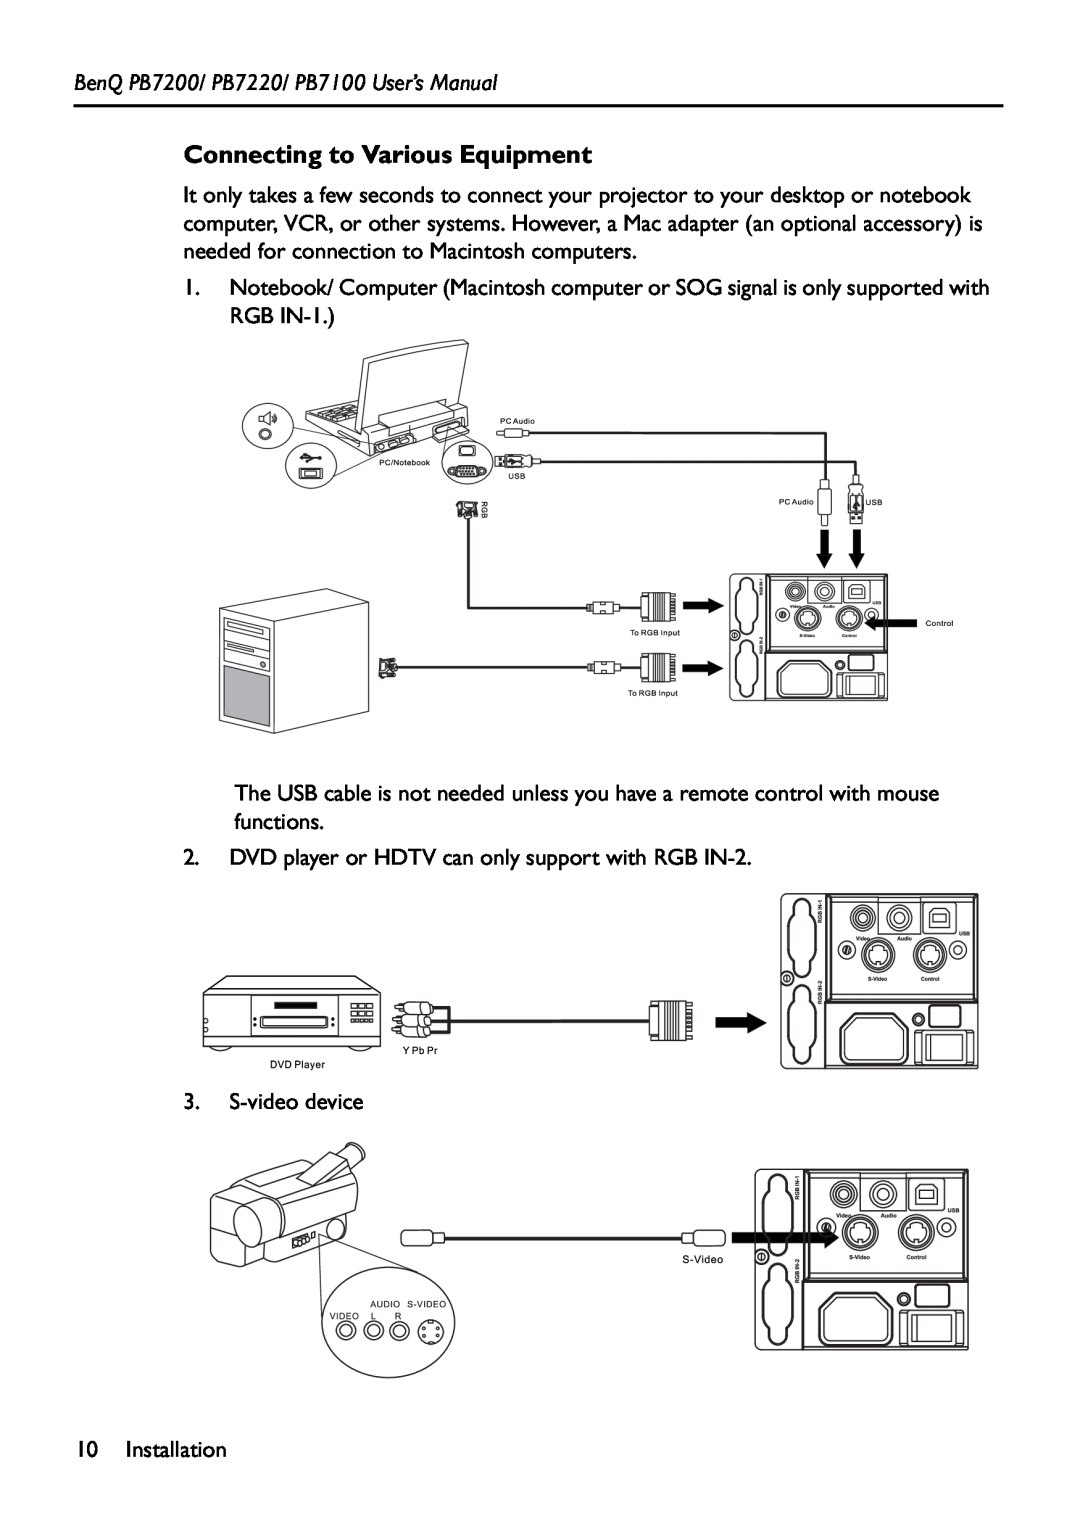 BenQ manual Connecting to Various Equipment, BenQ PB7200/ PB7220/ PB7100 User’s Manual 